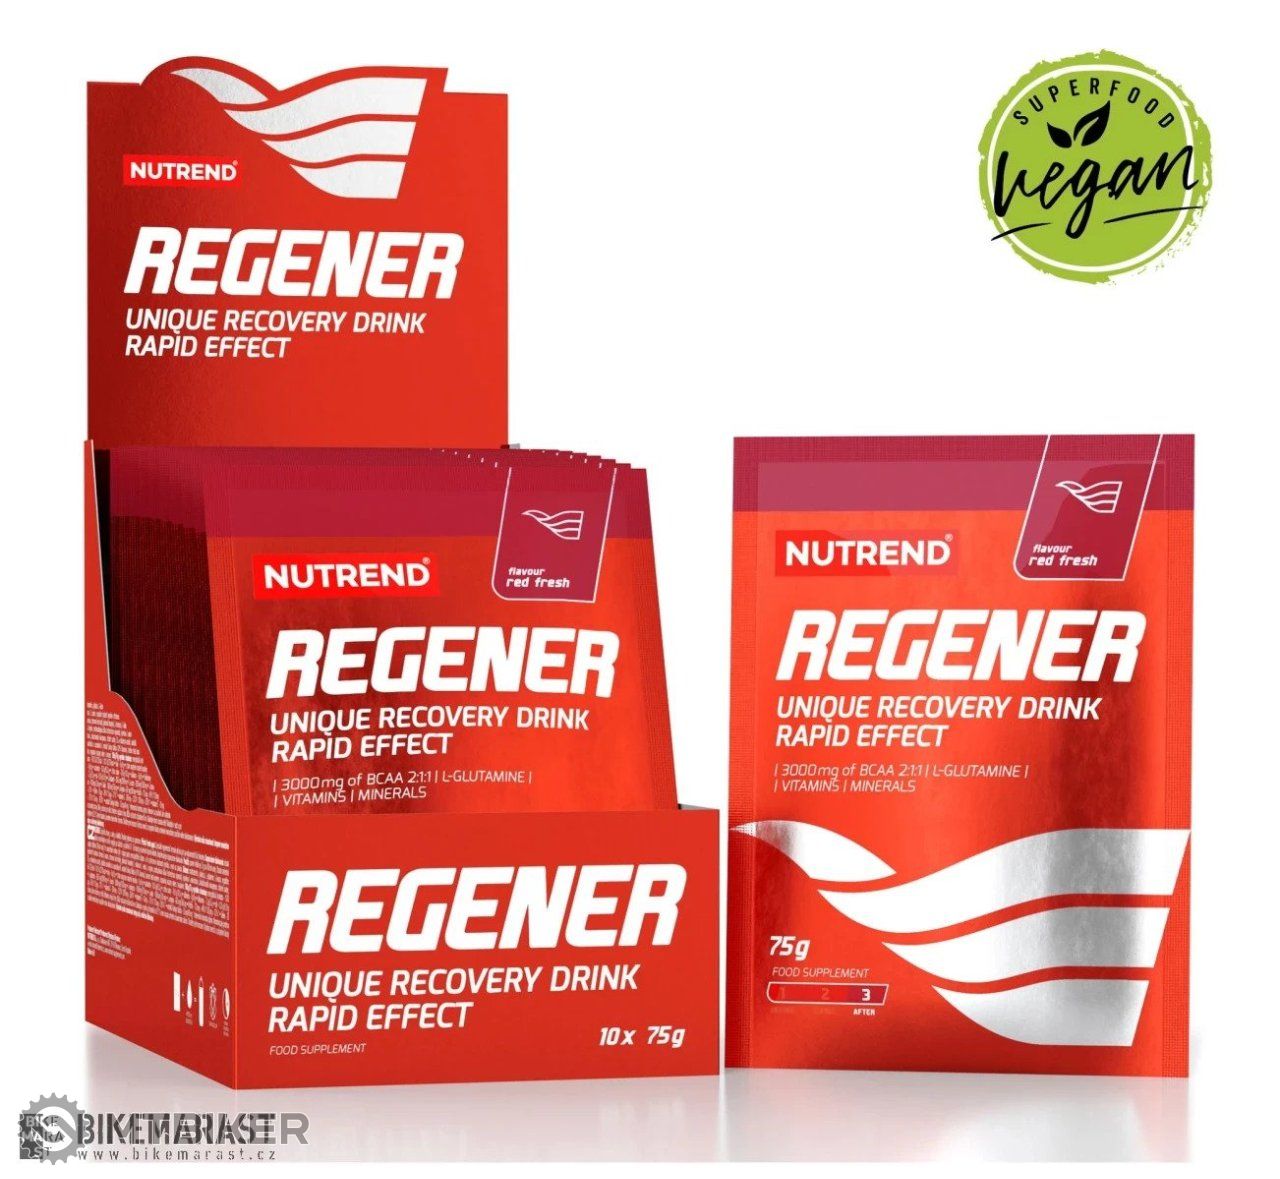 Nutrend REGENER regenerační nápoj, 10 x 75 g